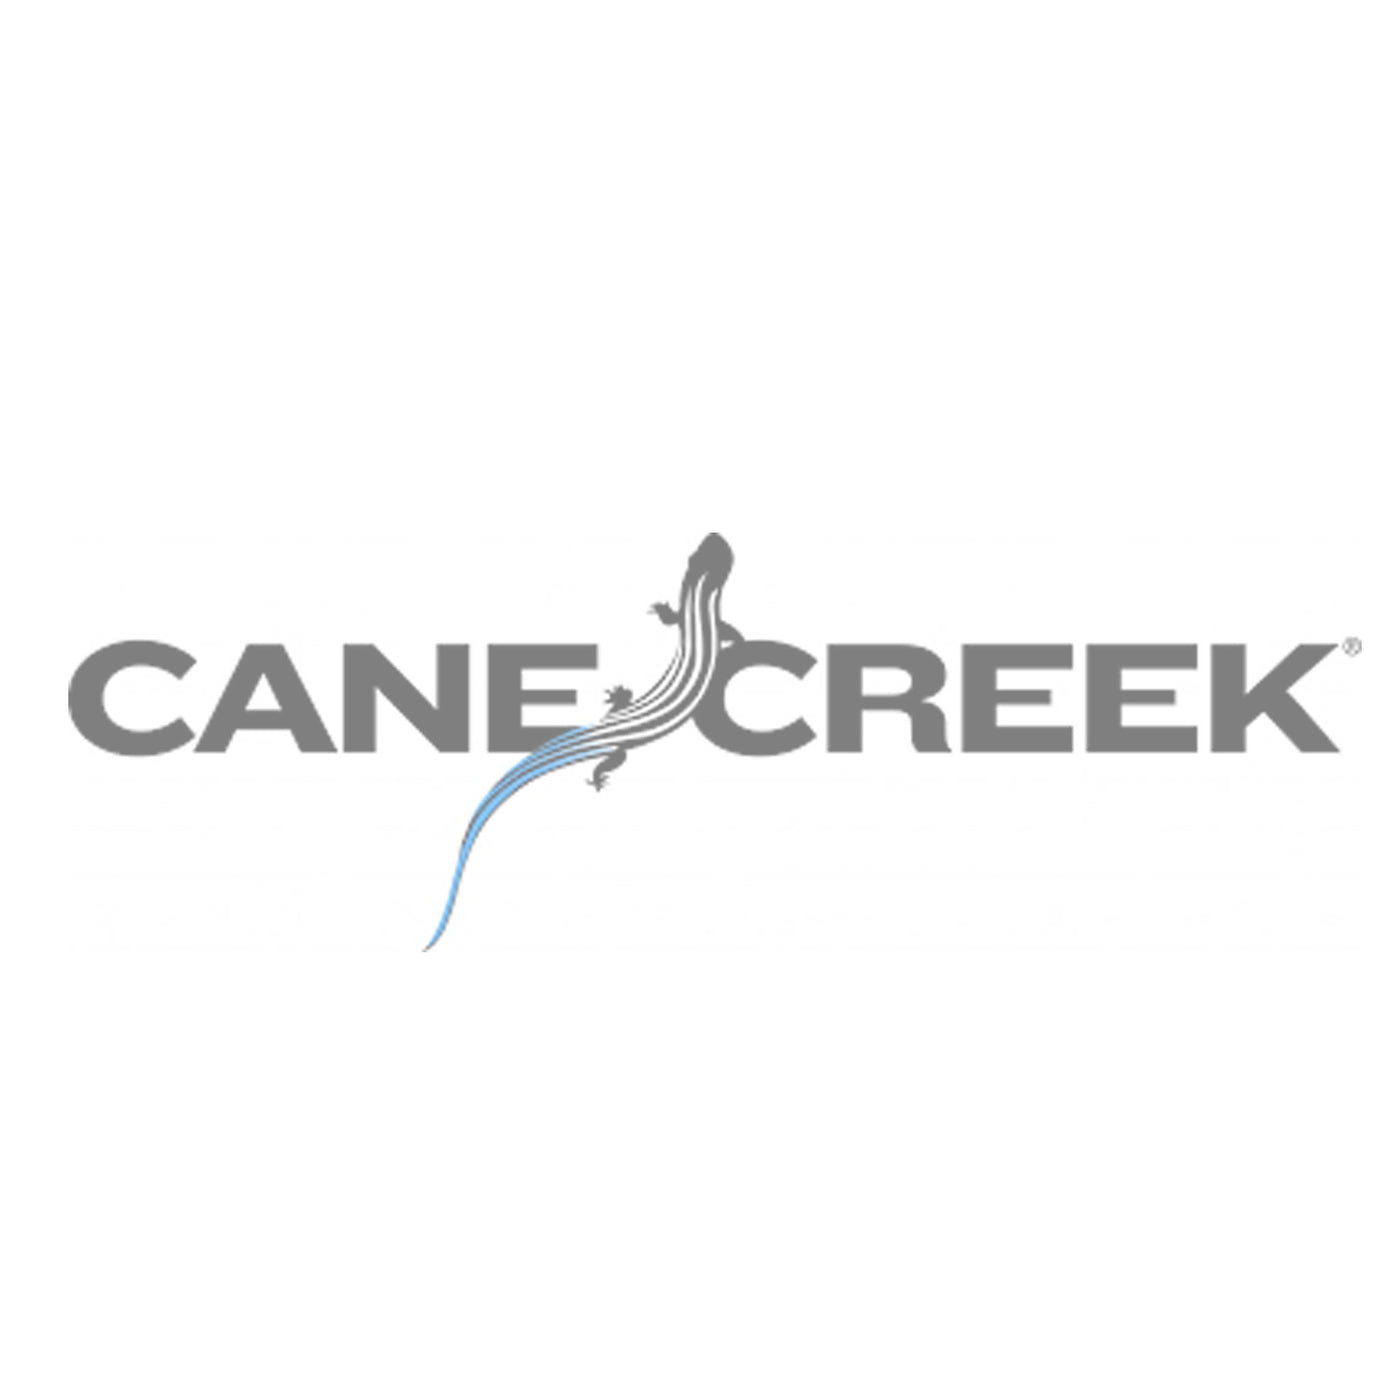 Cane Creek spring converter